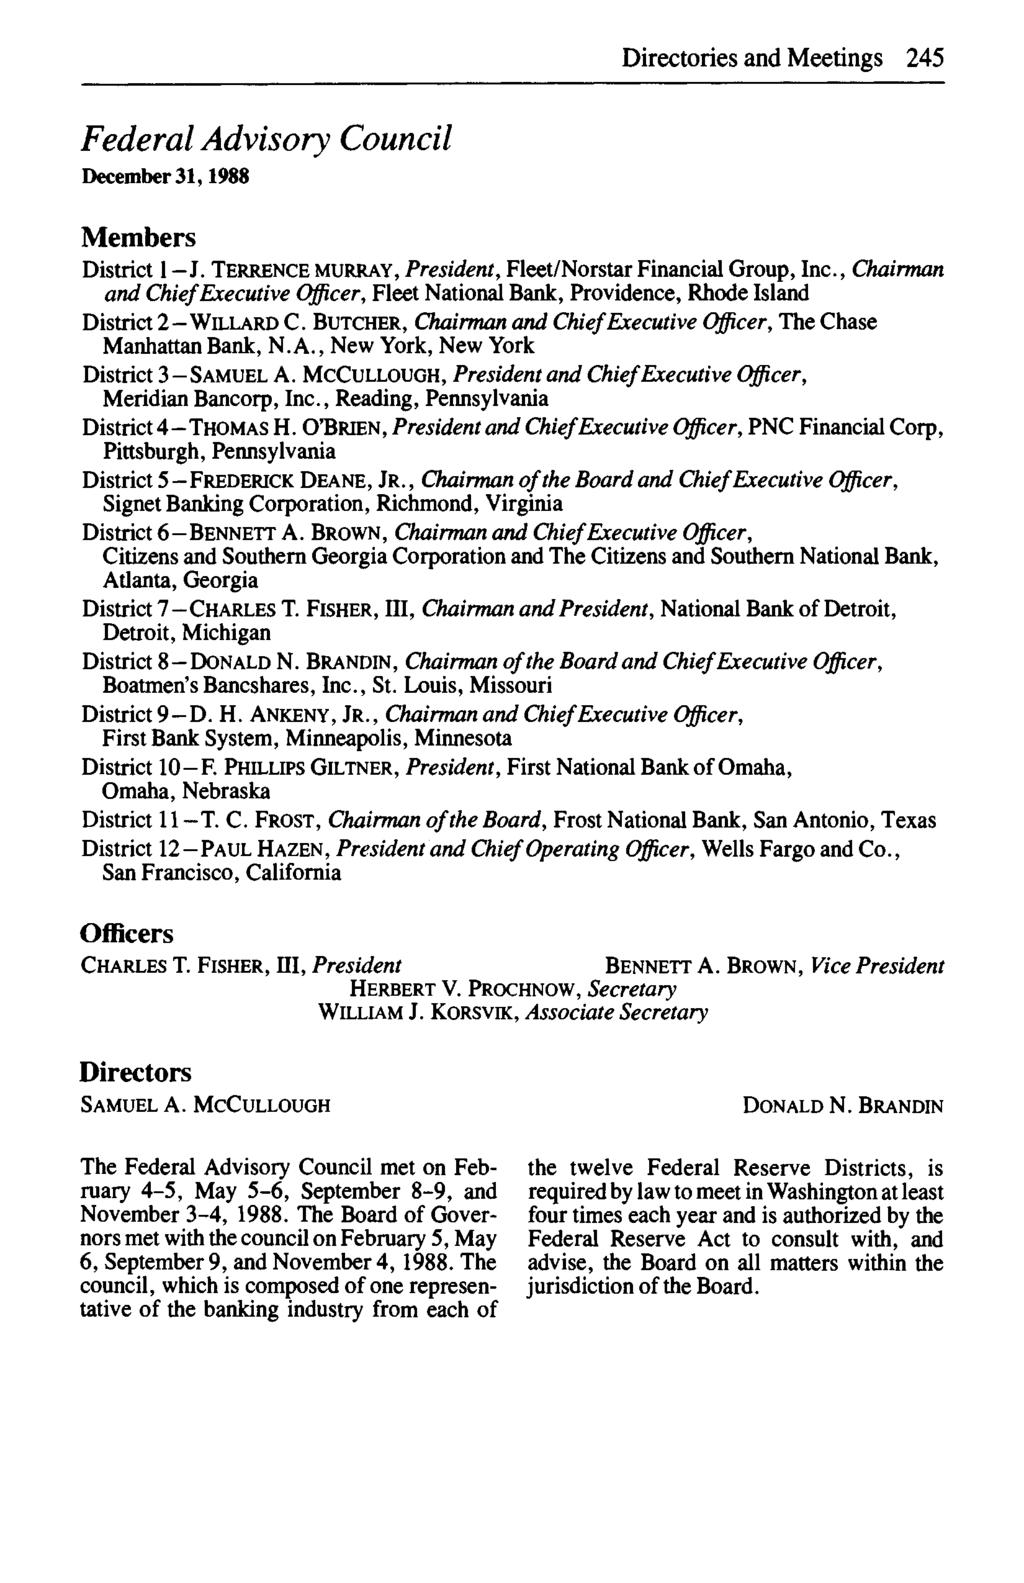 1988 Directories and Meetings 245 December 31,1988 District 1 - J. TERRENCE MURRAY, President, Fleet/Norstar Financial Group, Inc.